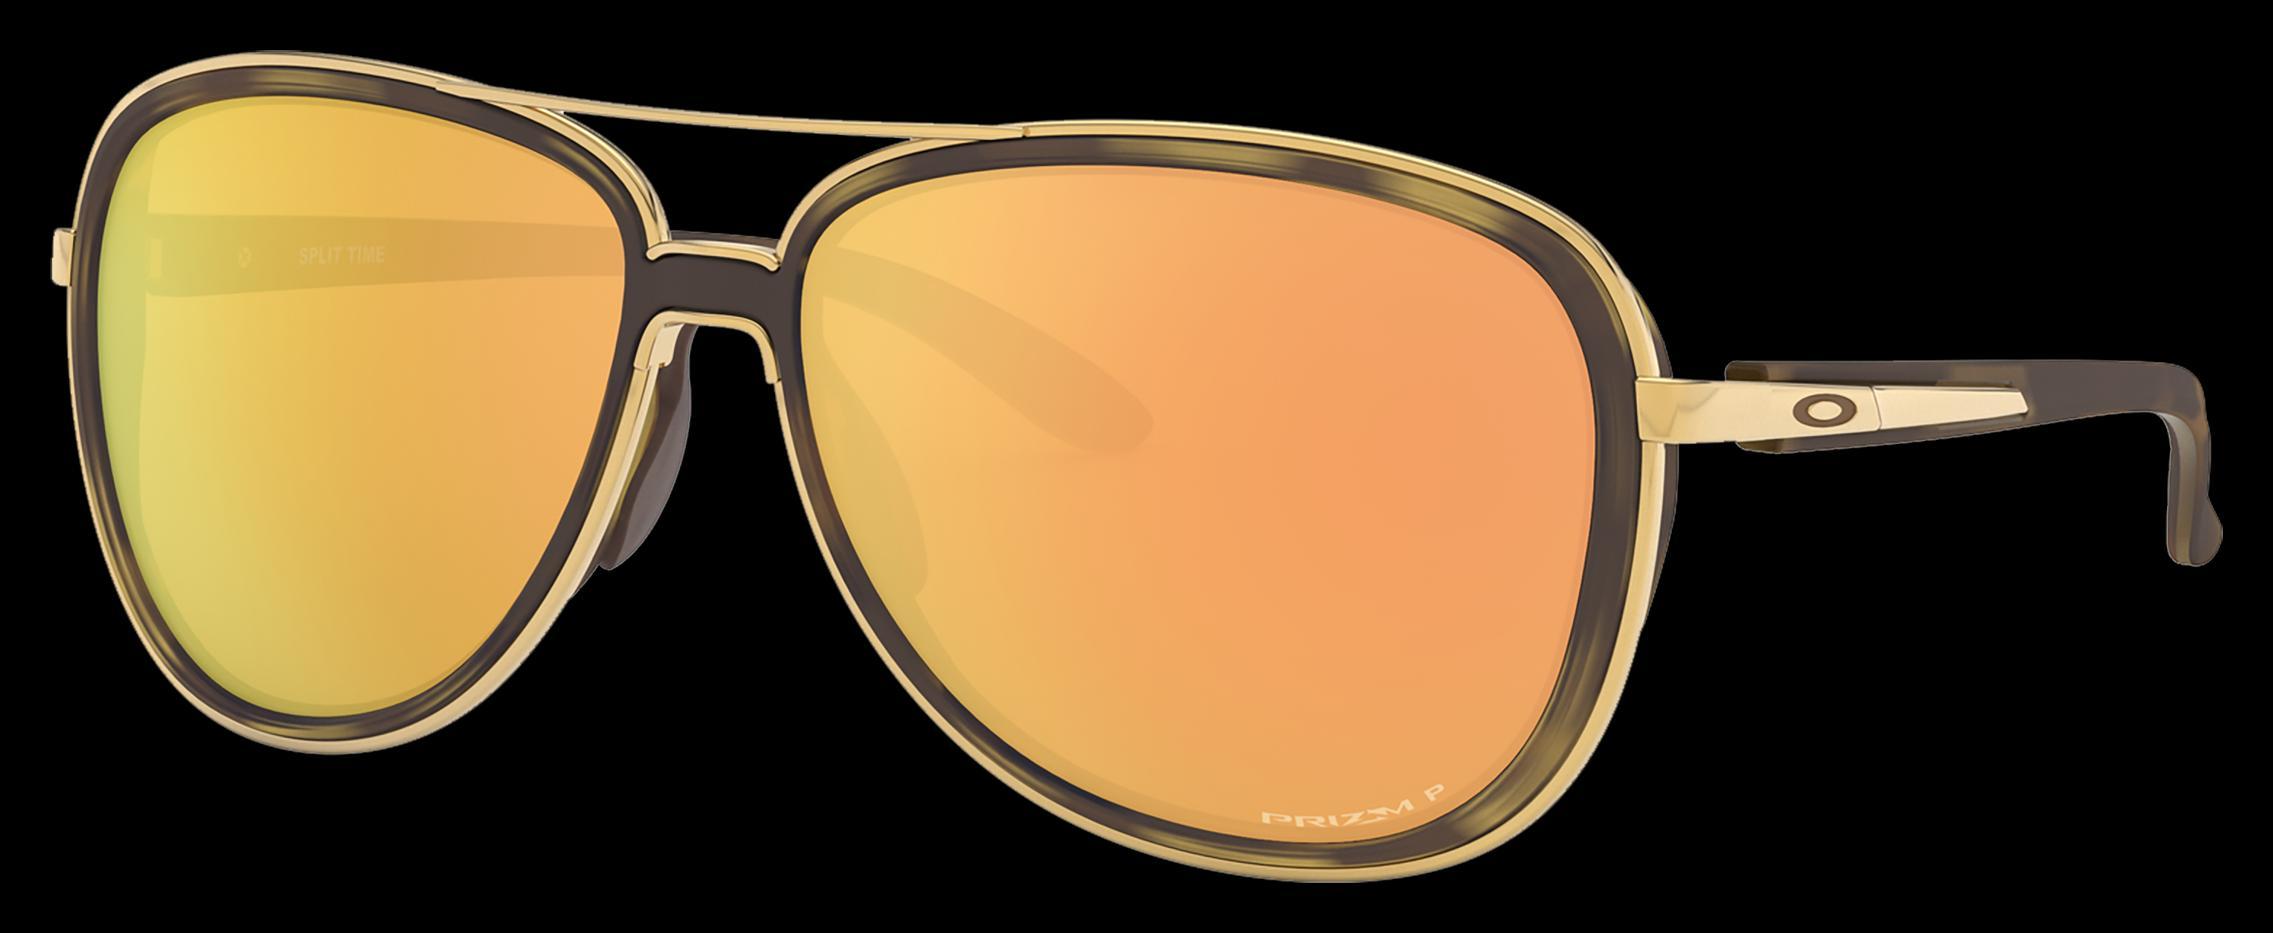 Oakley 58mm Gradient Aviator Sunglasses Product Image